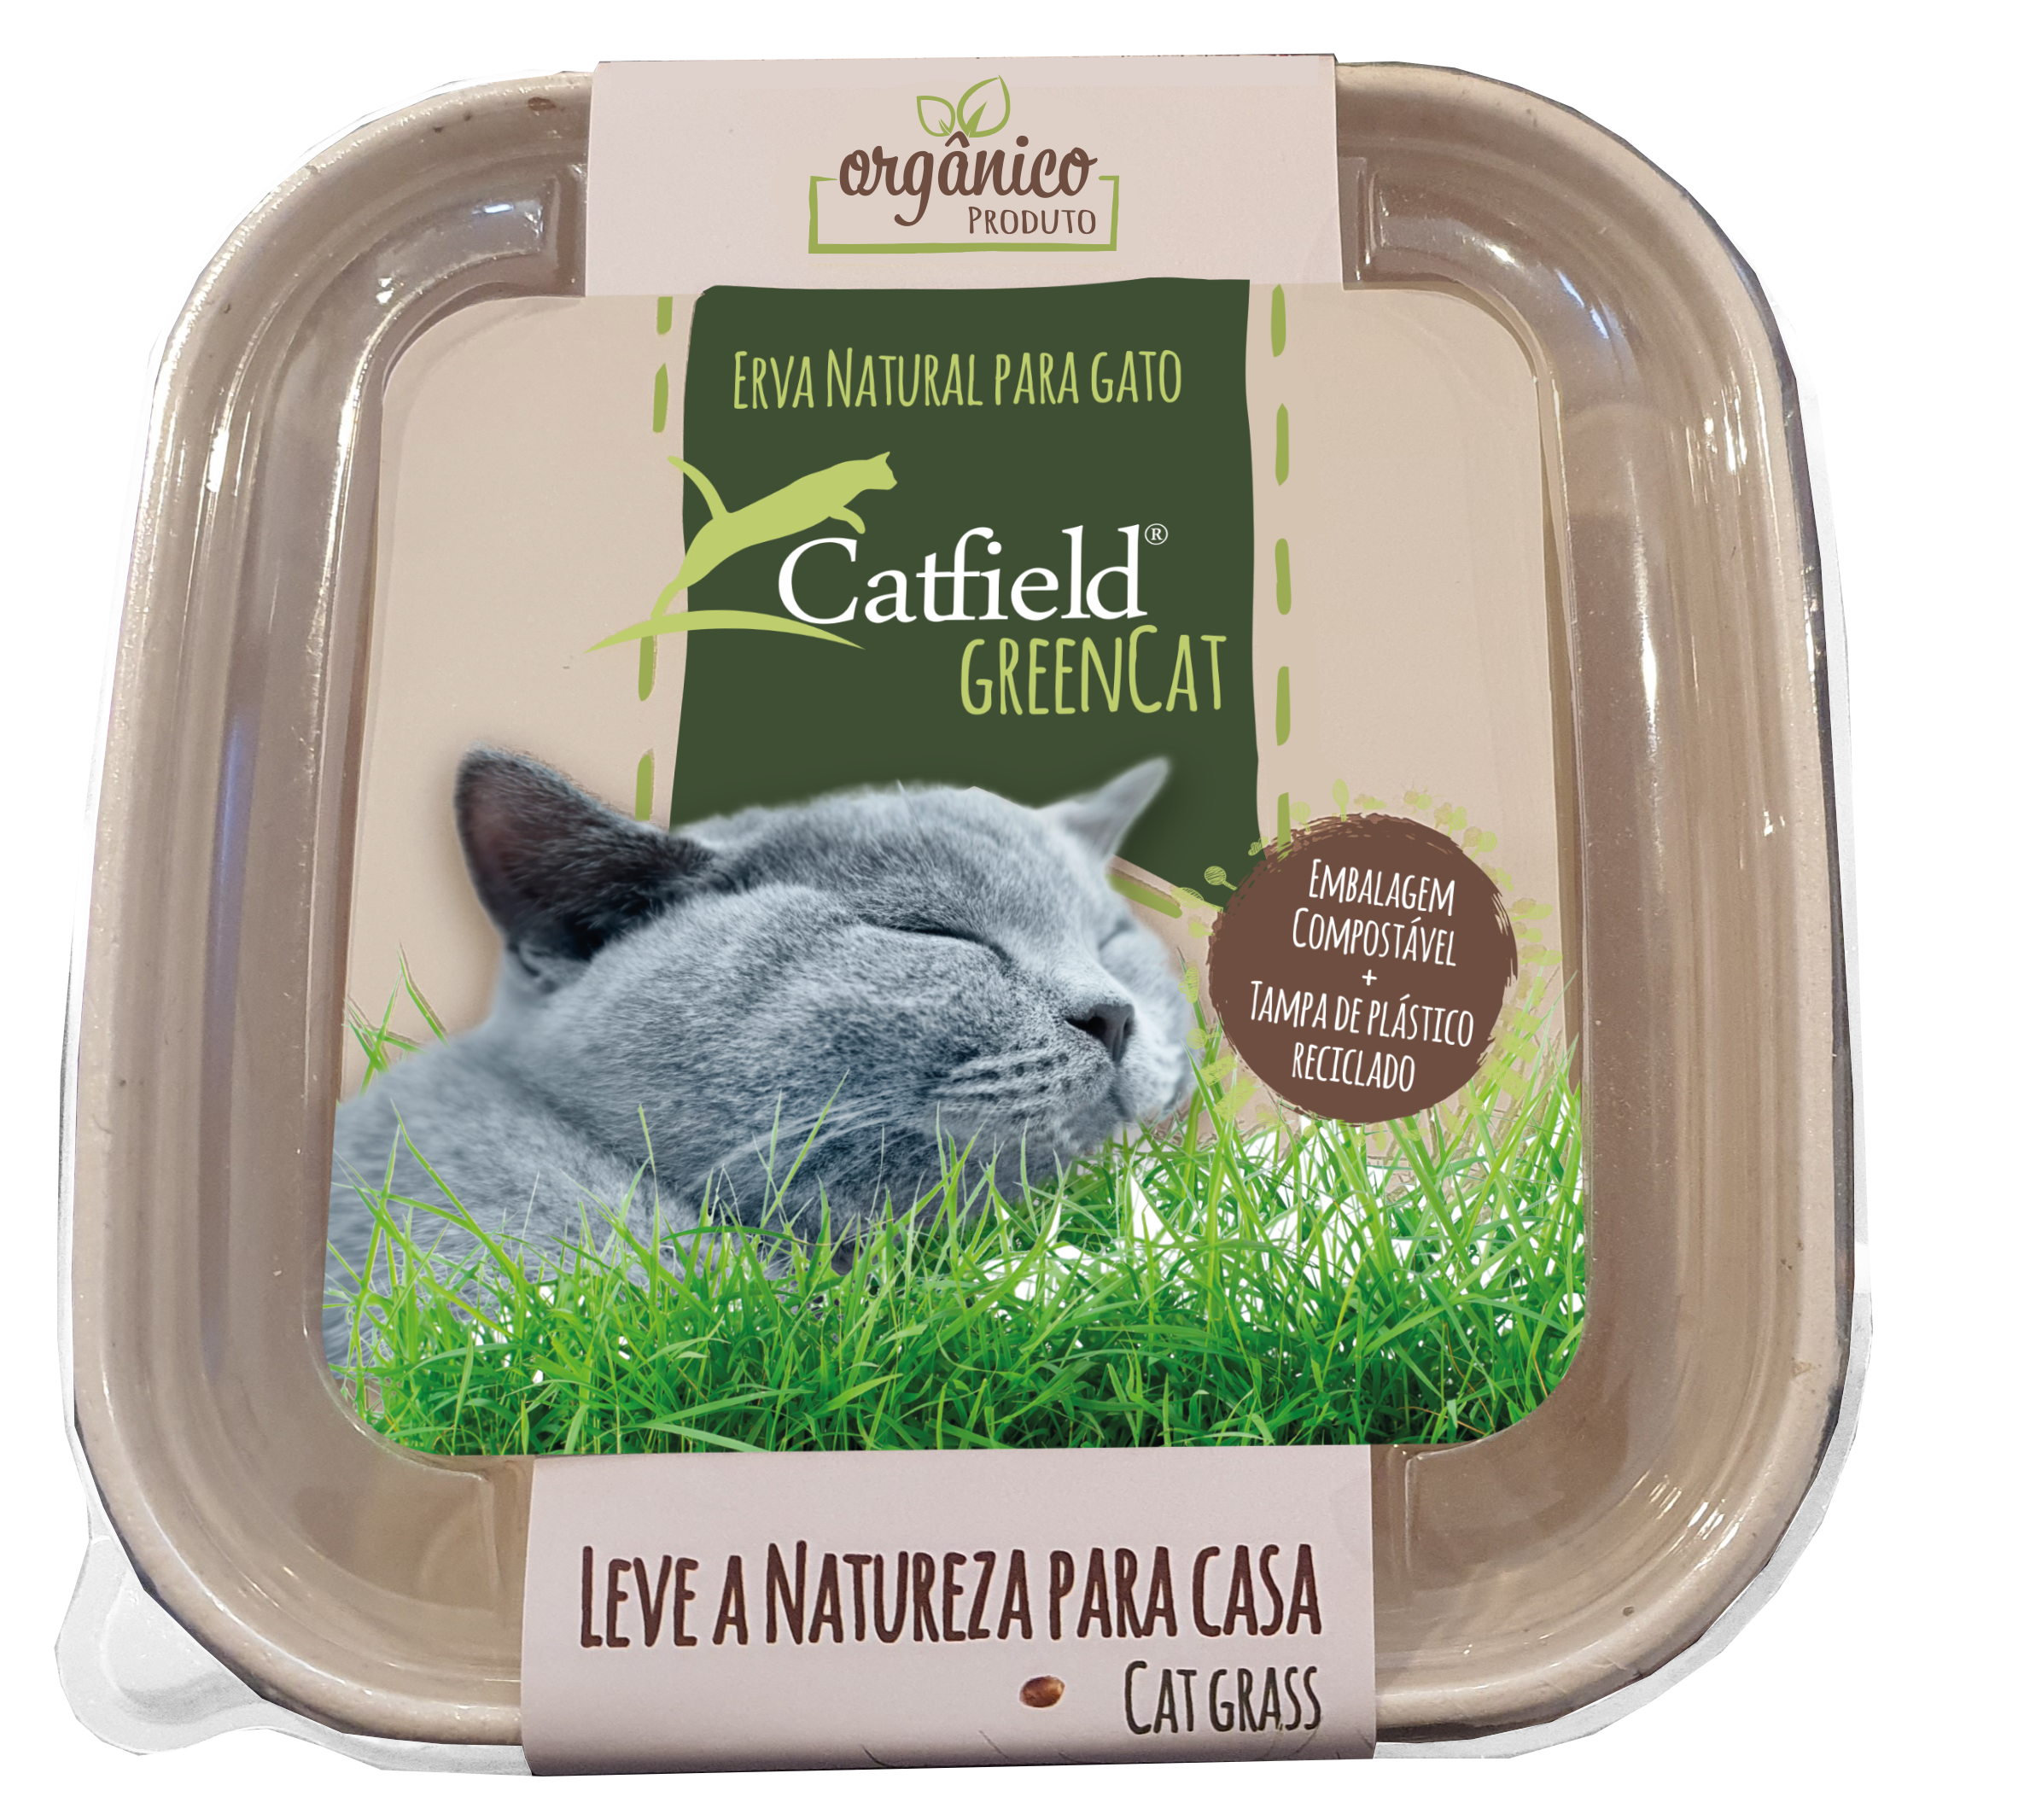 Gato verde de Catfield - Chrysdietetic